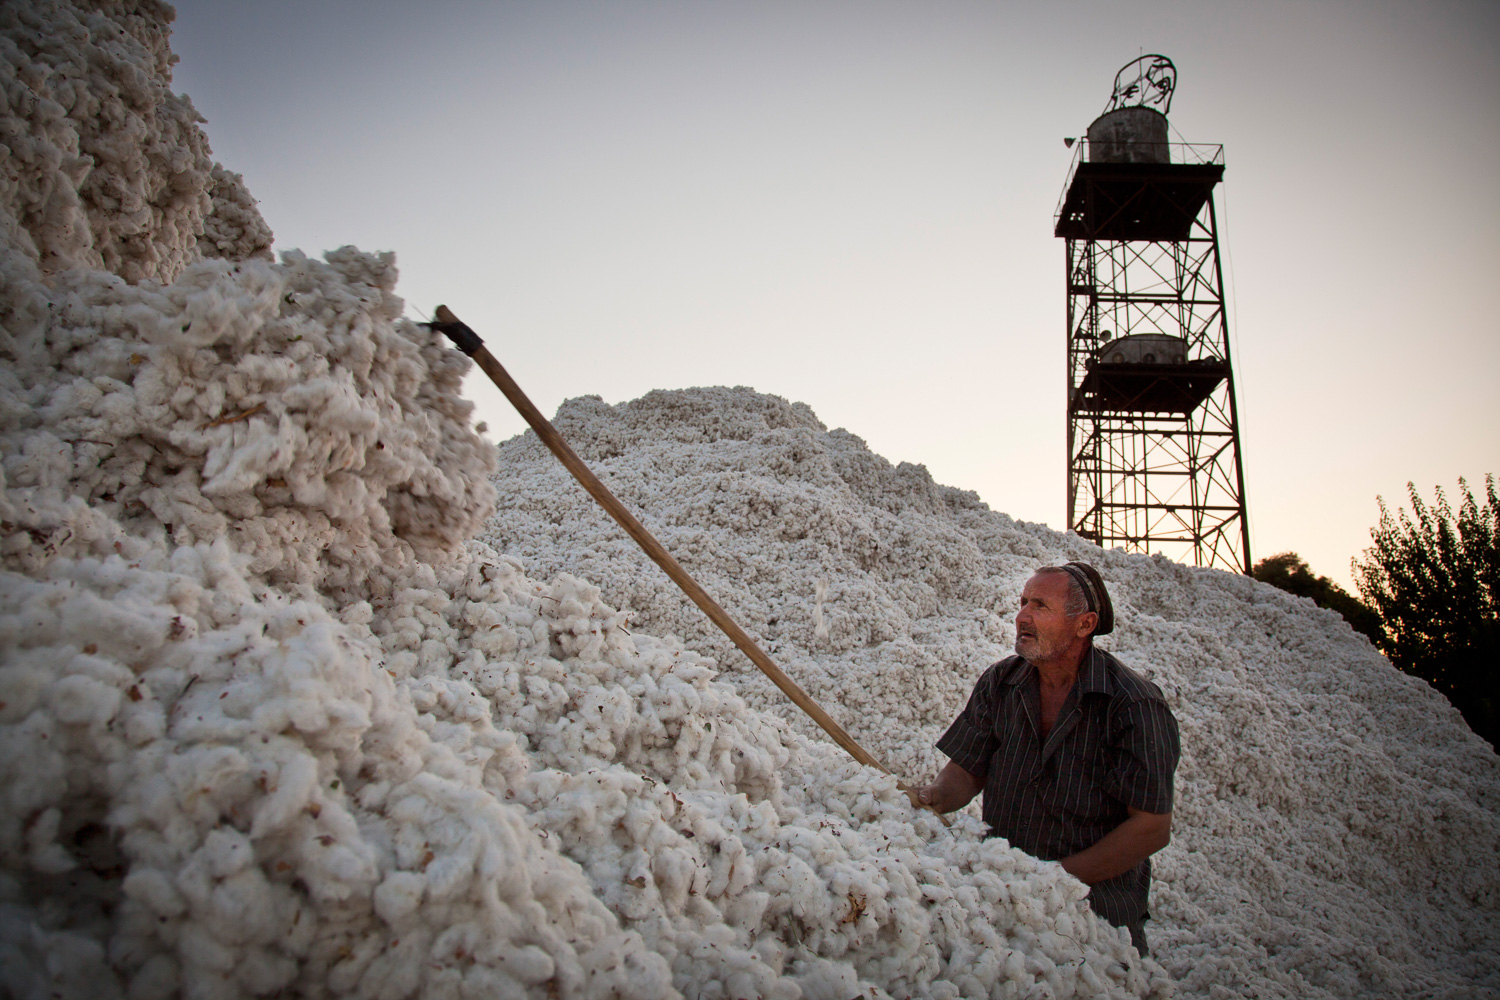  Cotton harvest near Tursunzoda, Tajikistan 